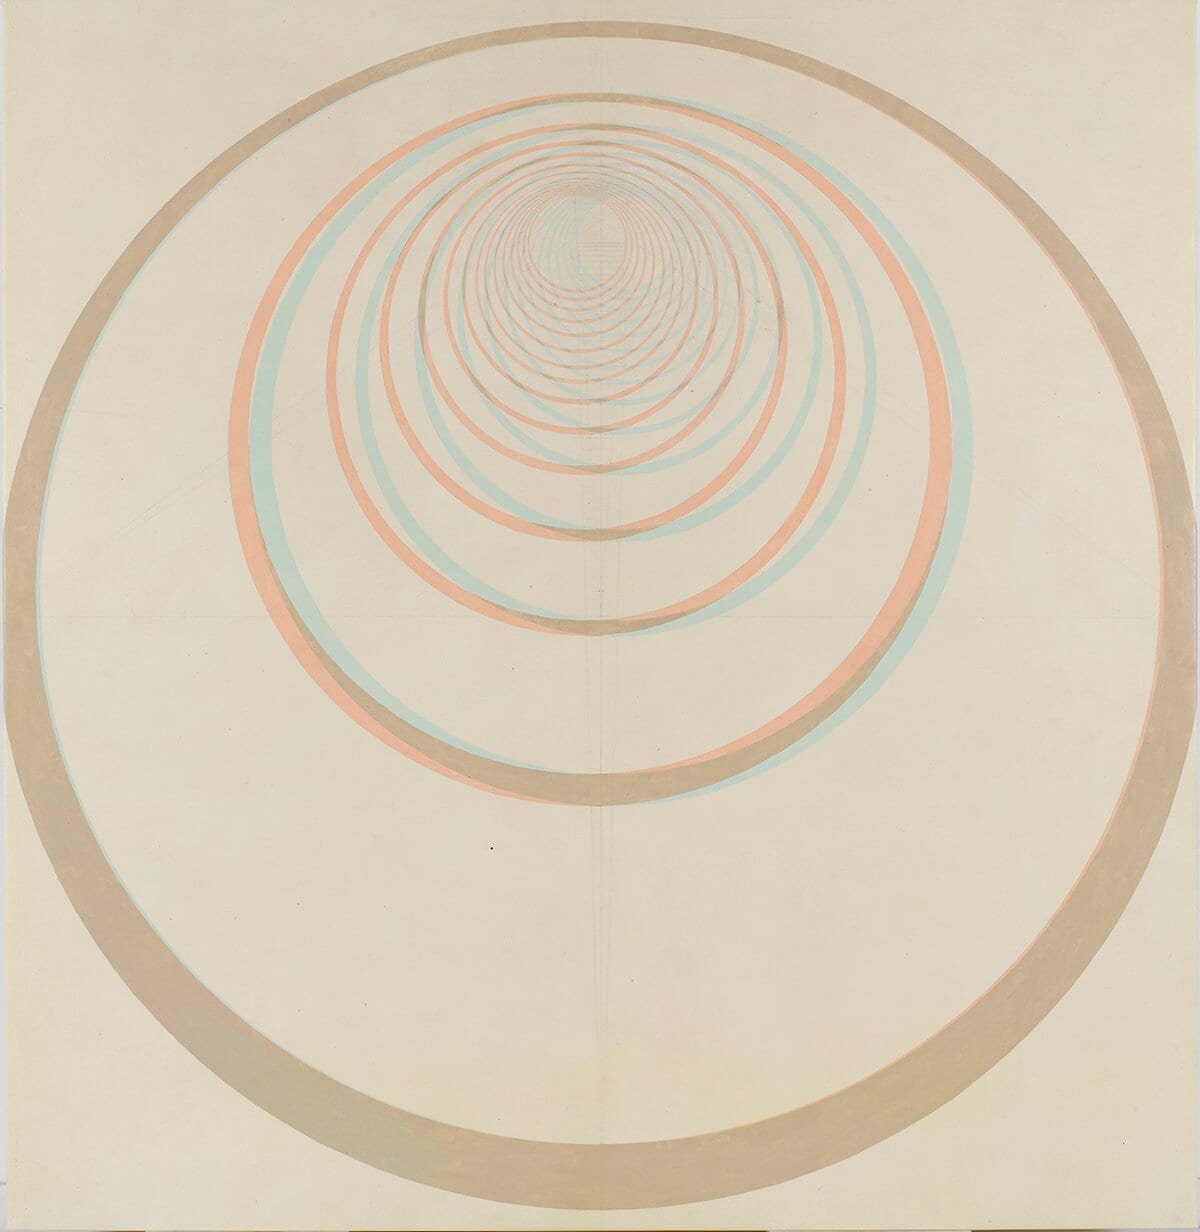 Luis Frangella, Geometric, 1980